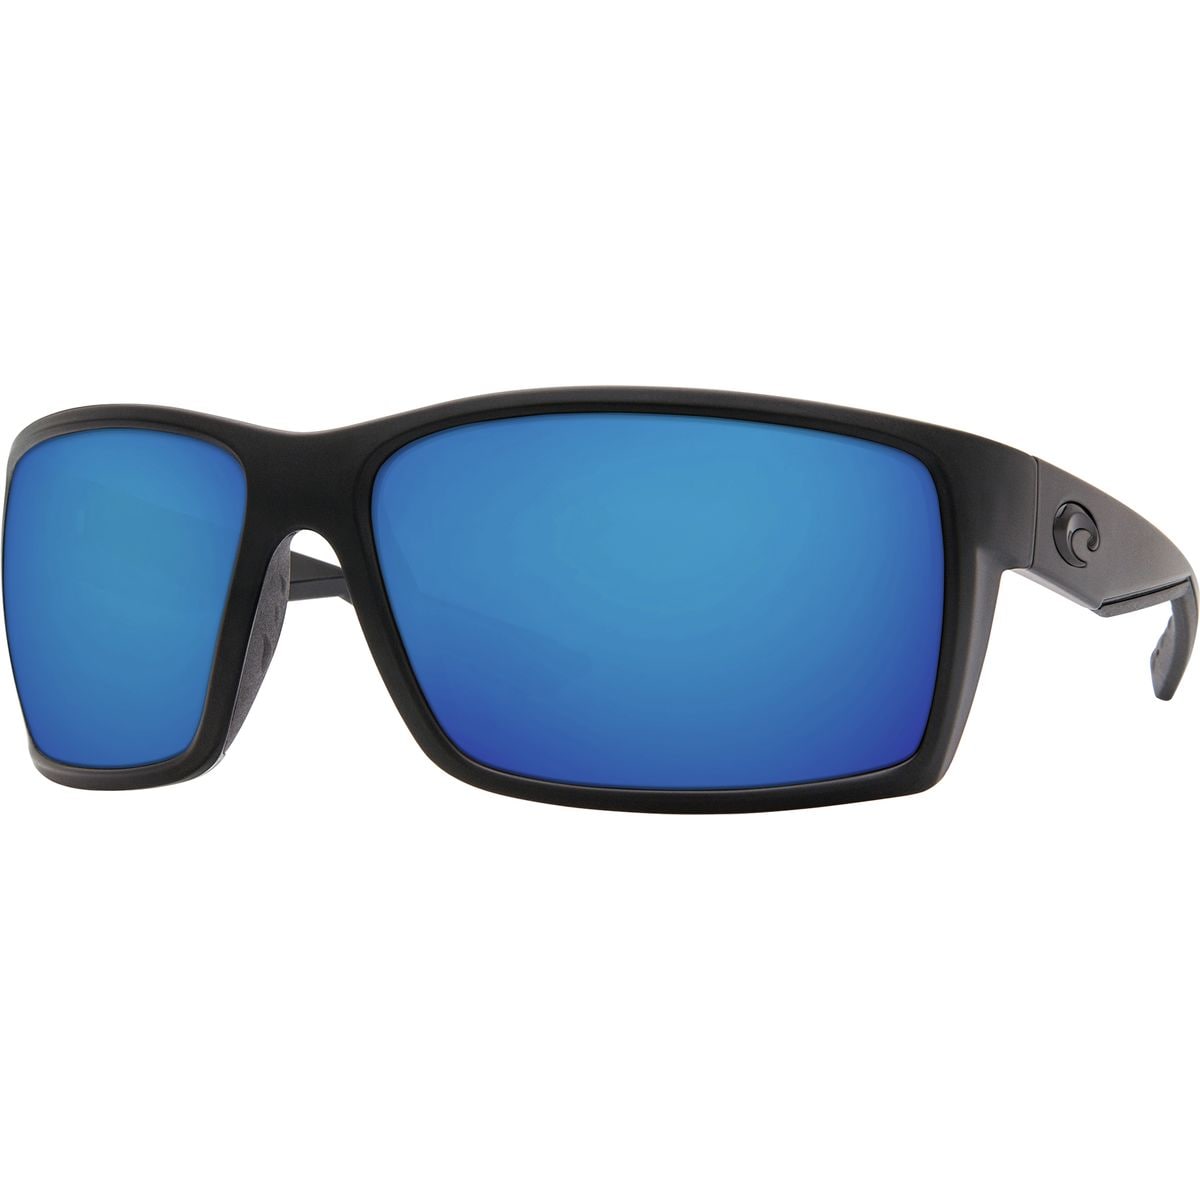 Costa Reefton 580G Polarized Sunglasses